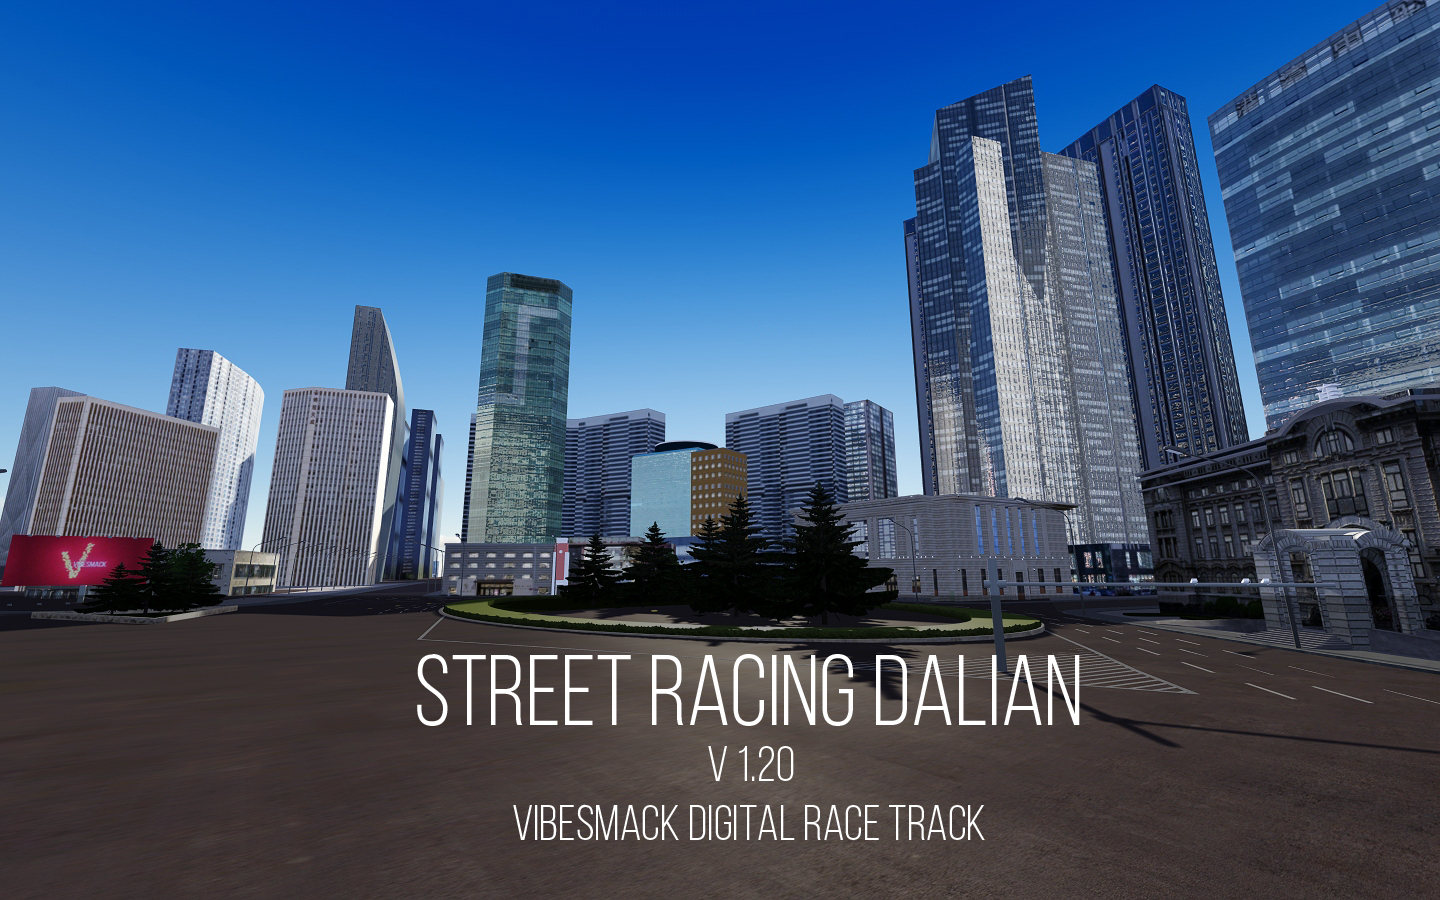 VibeSmack Digital Race Track - Dalian